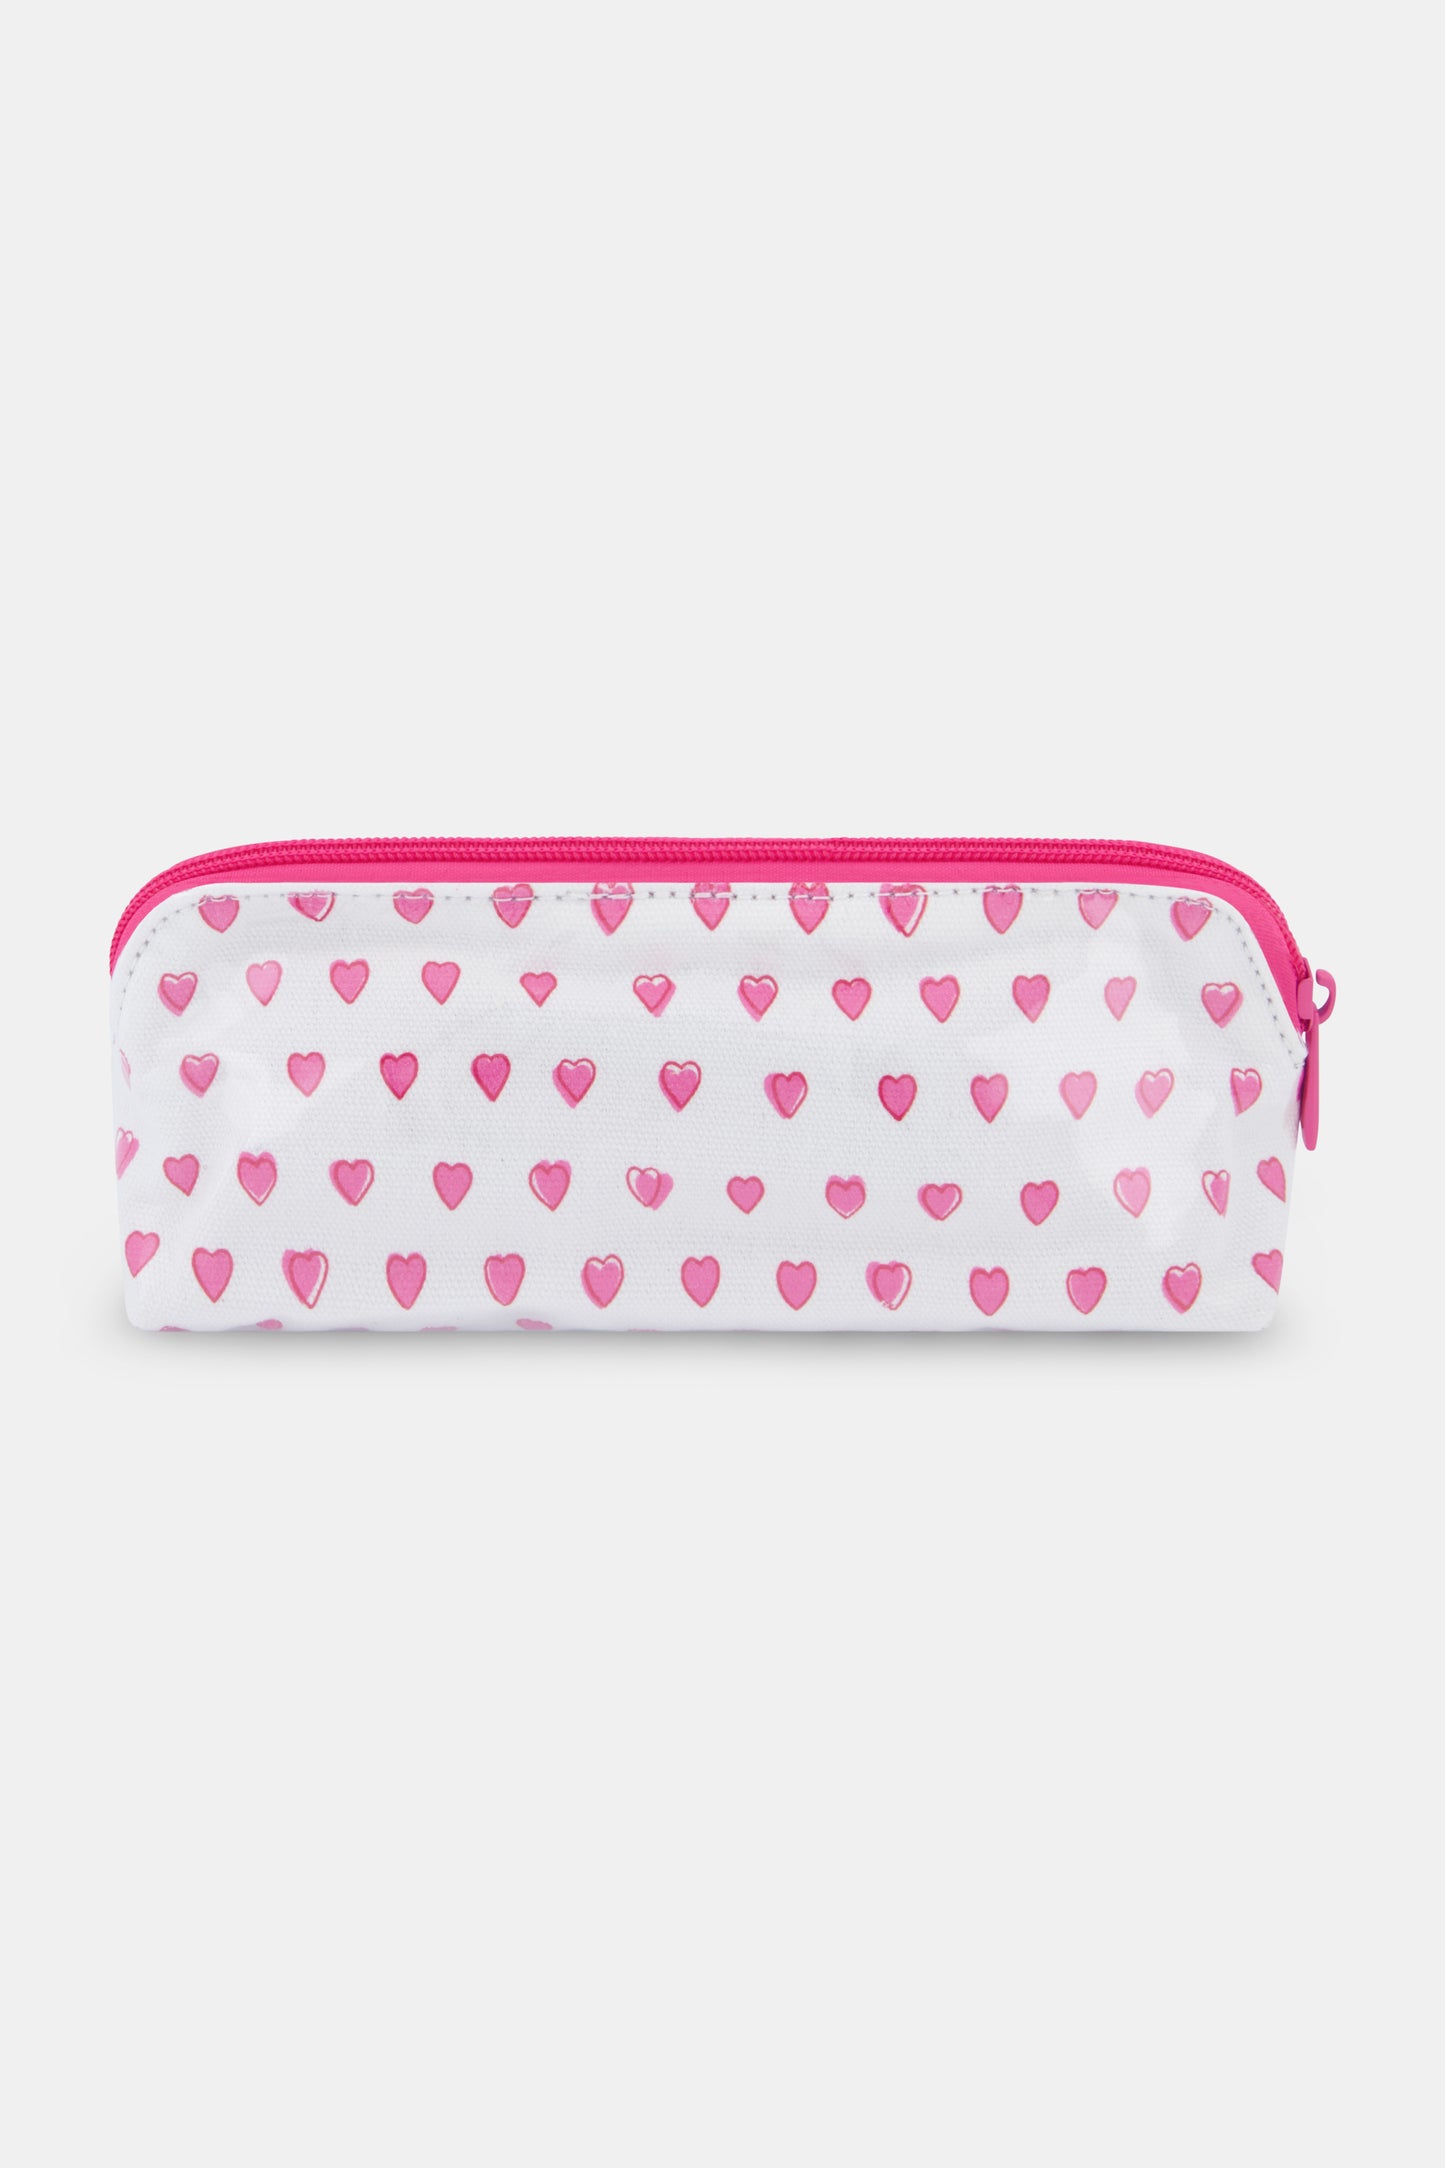 Roller-Rabbit-Hearts-Makeup-Bag-Pink